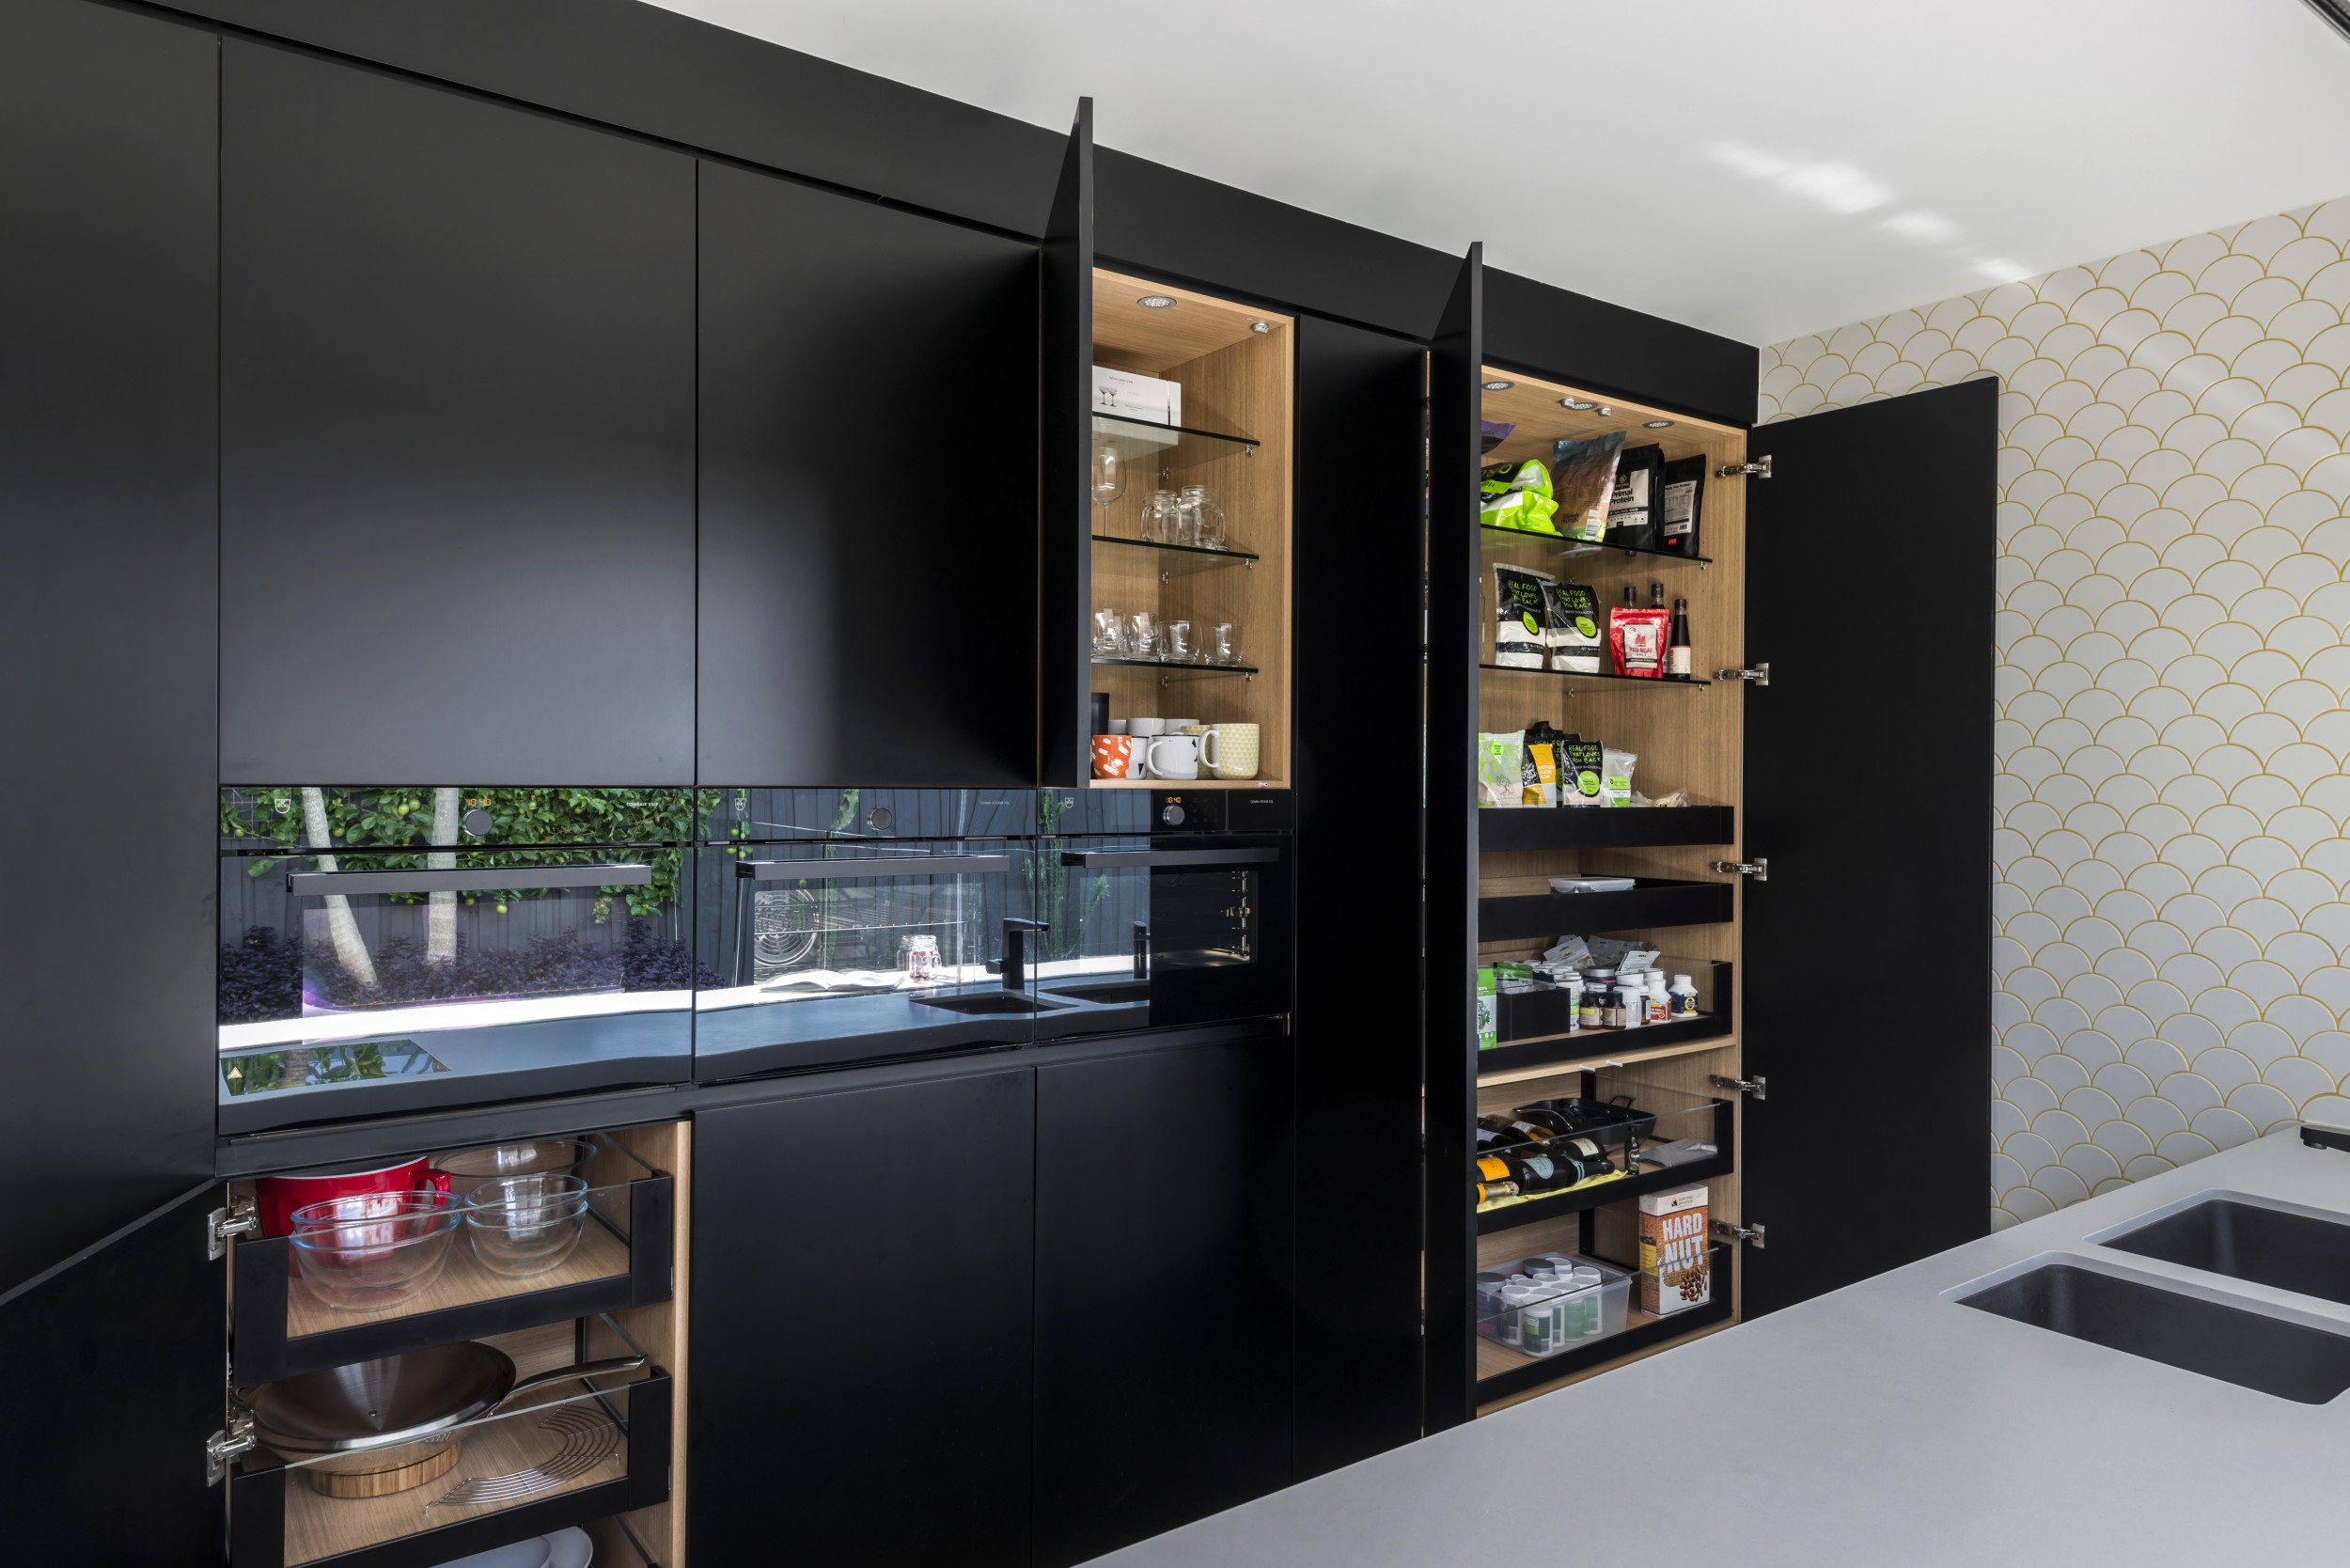 Germancraft Cabinets Sample Kitchen